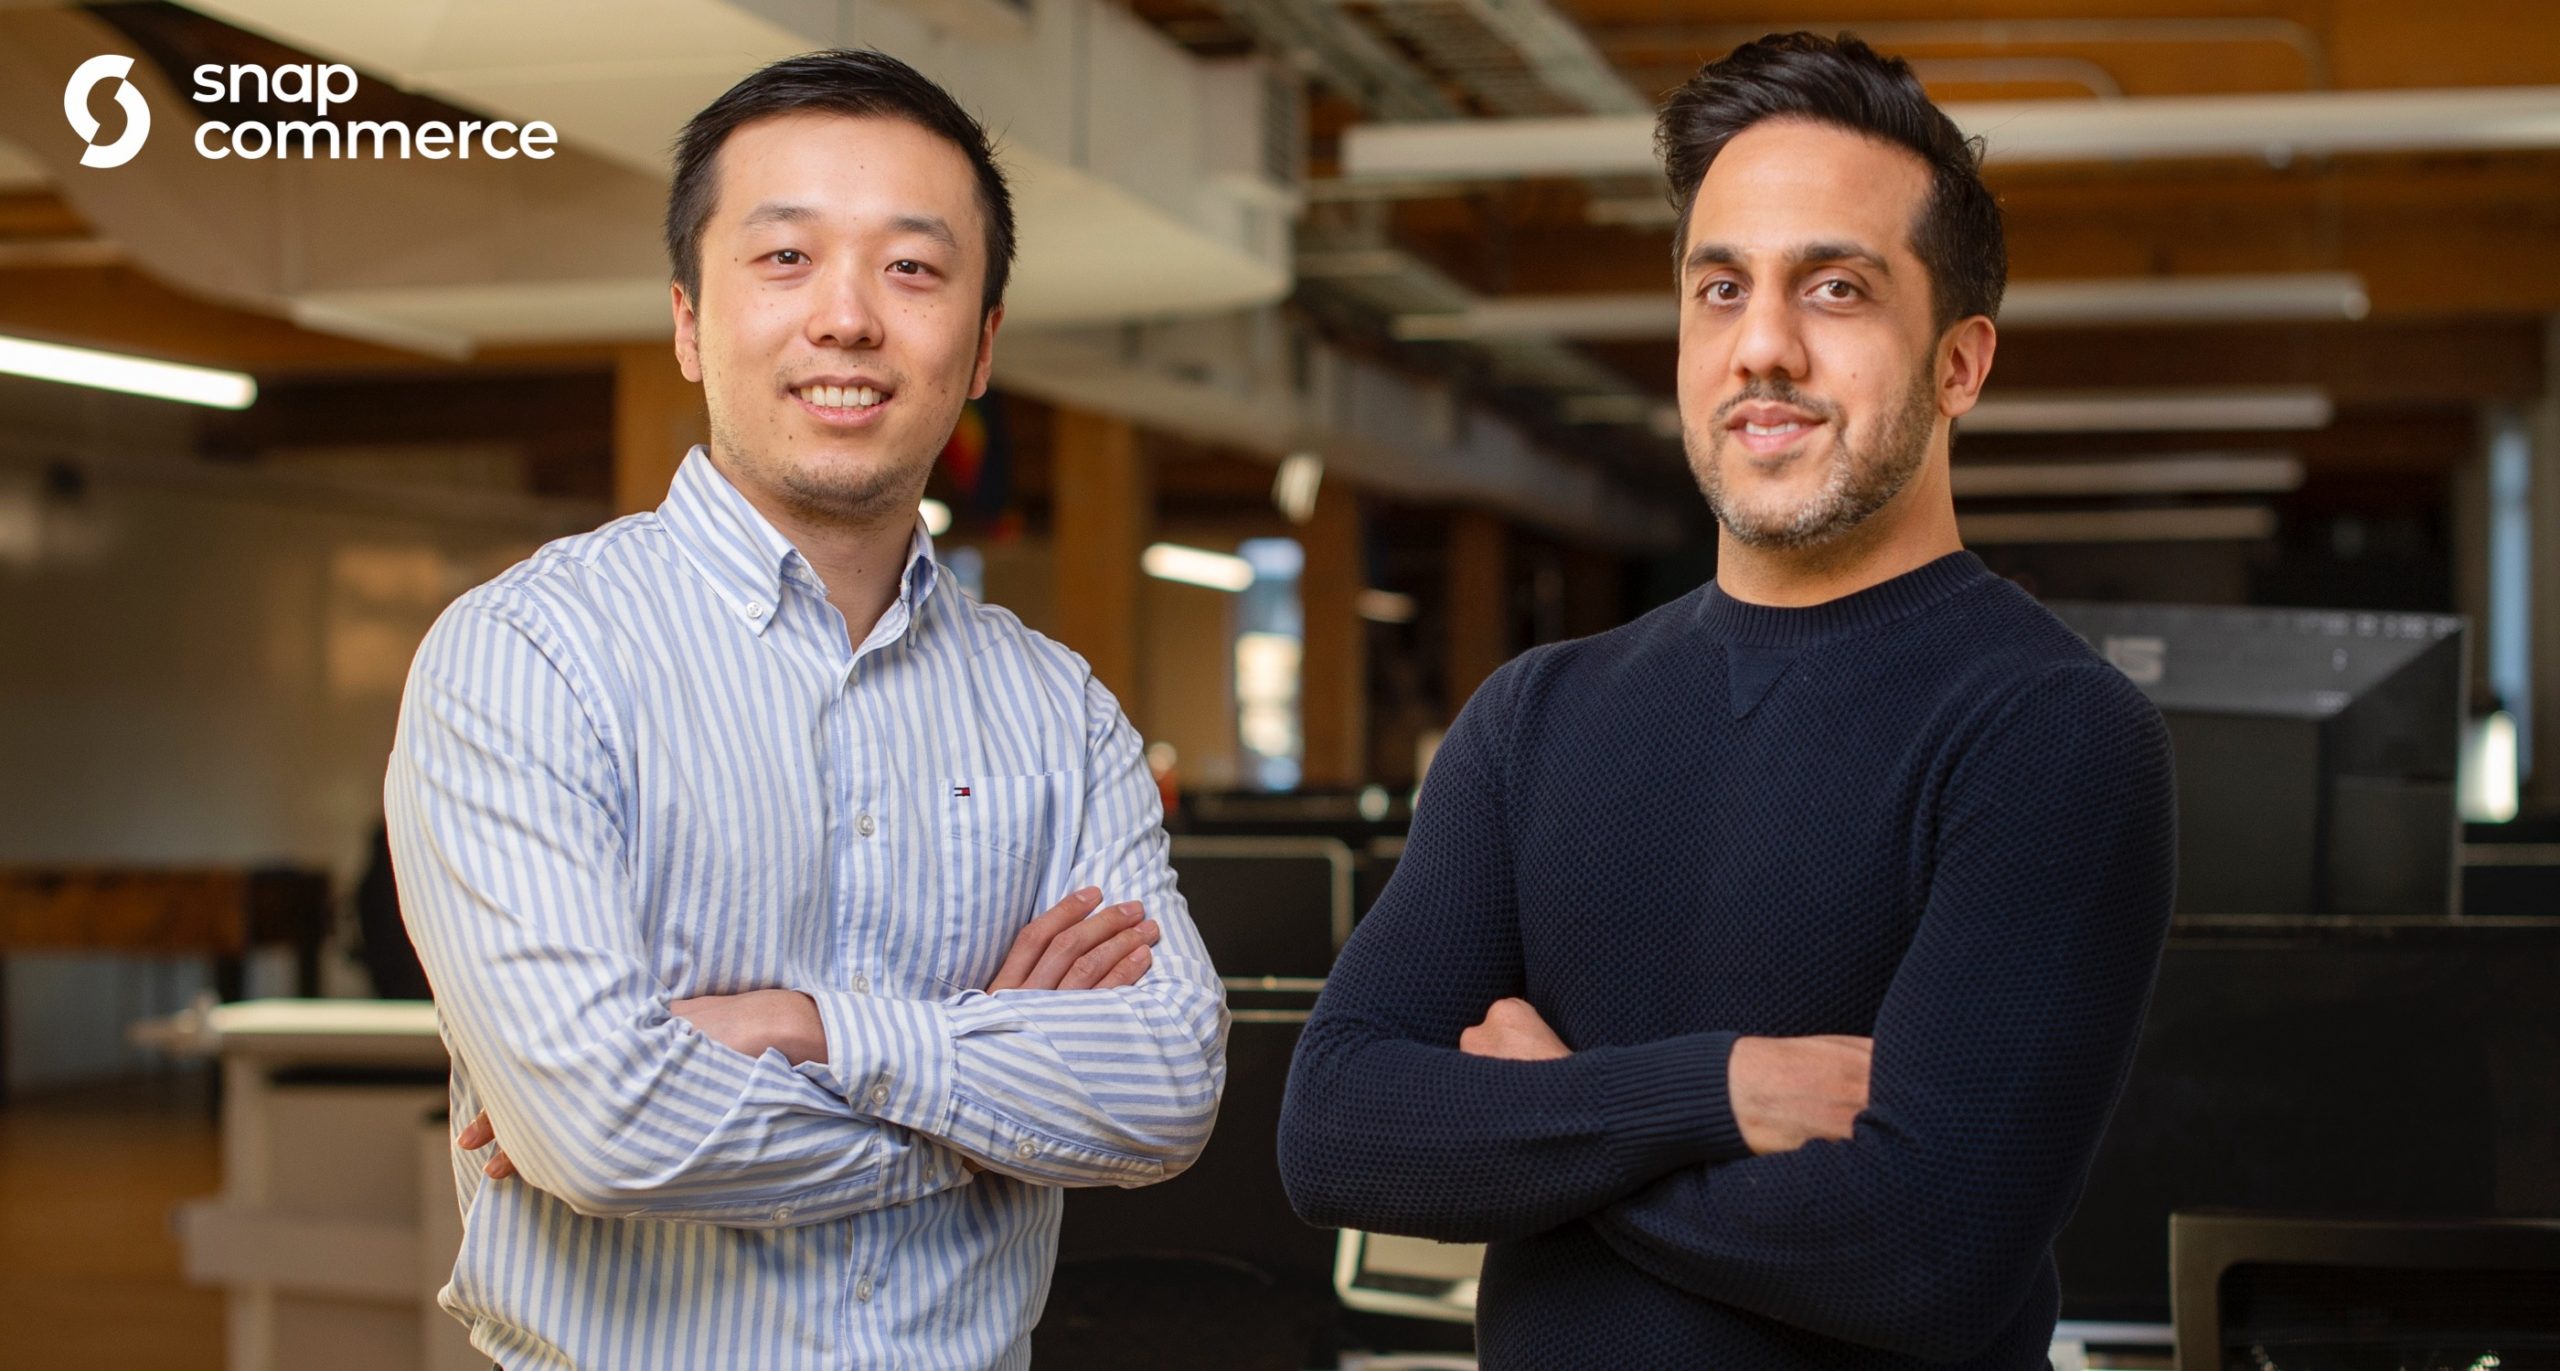 Snapcommerce entrepreneur Hussein Fazal secures $85 million for expansion